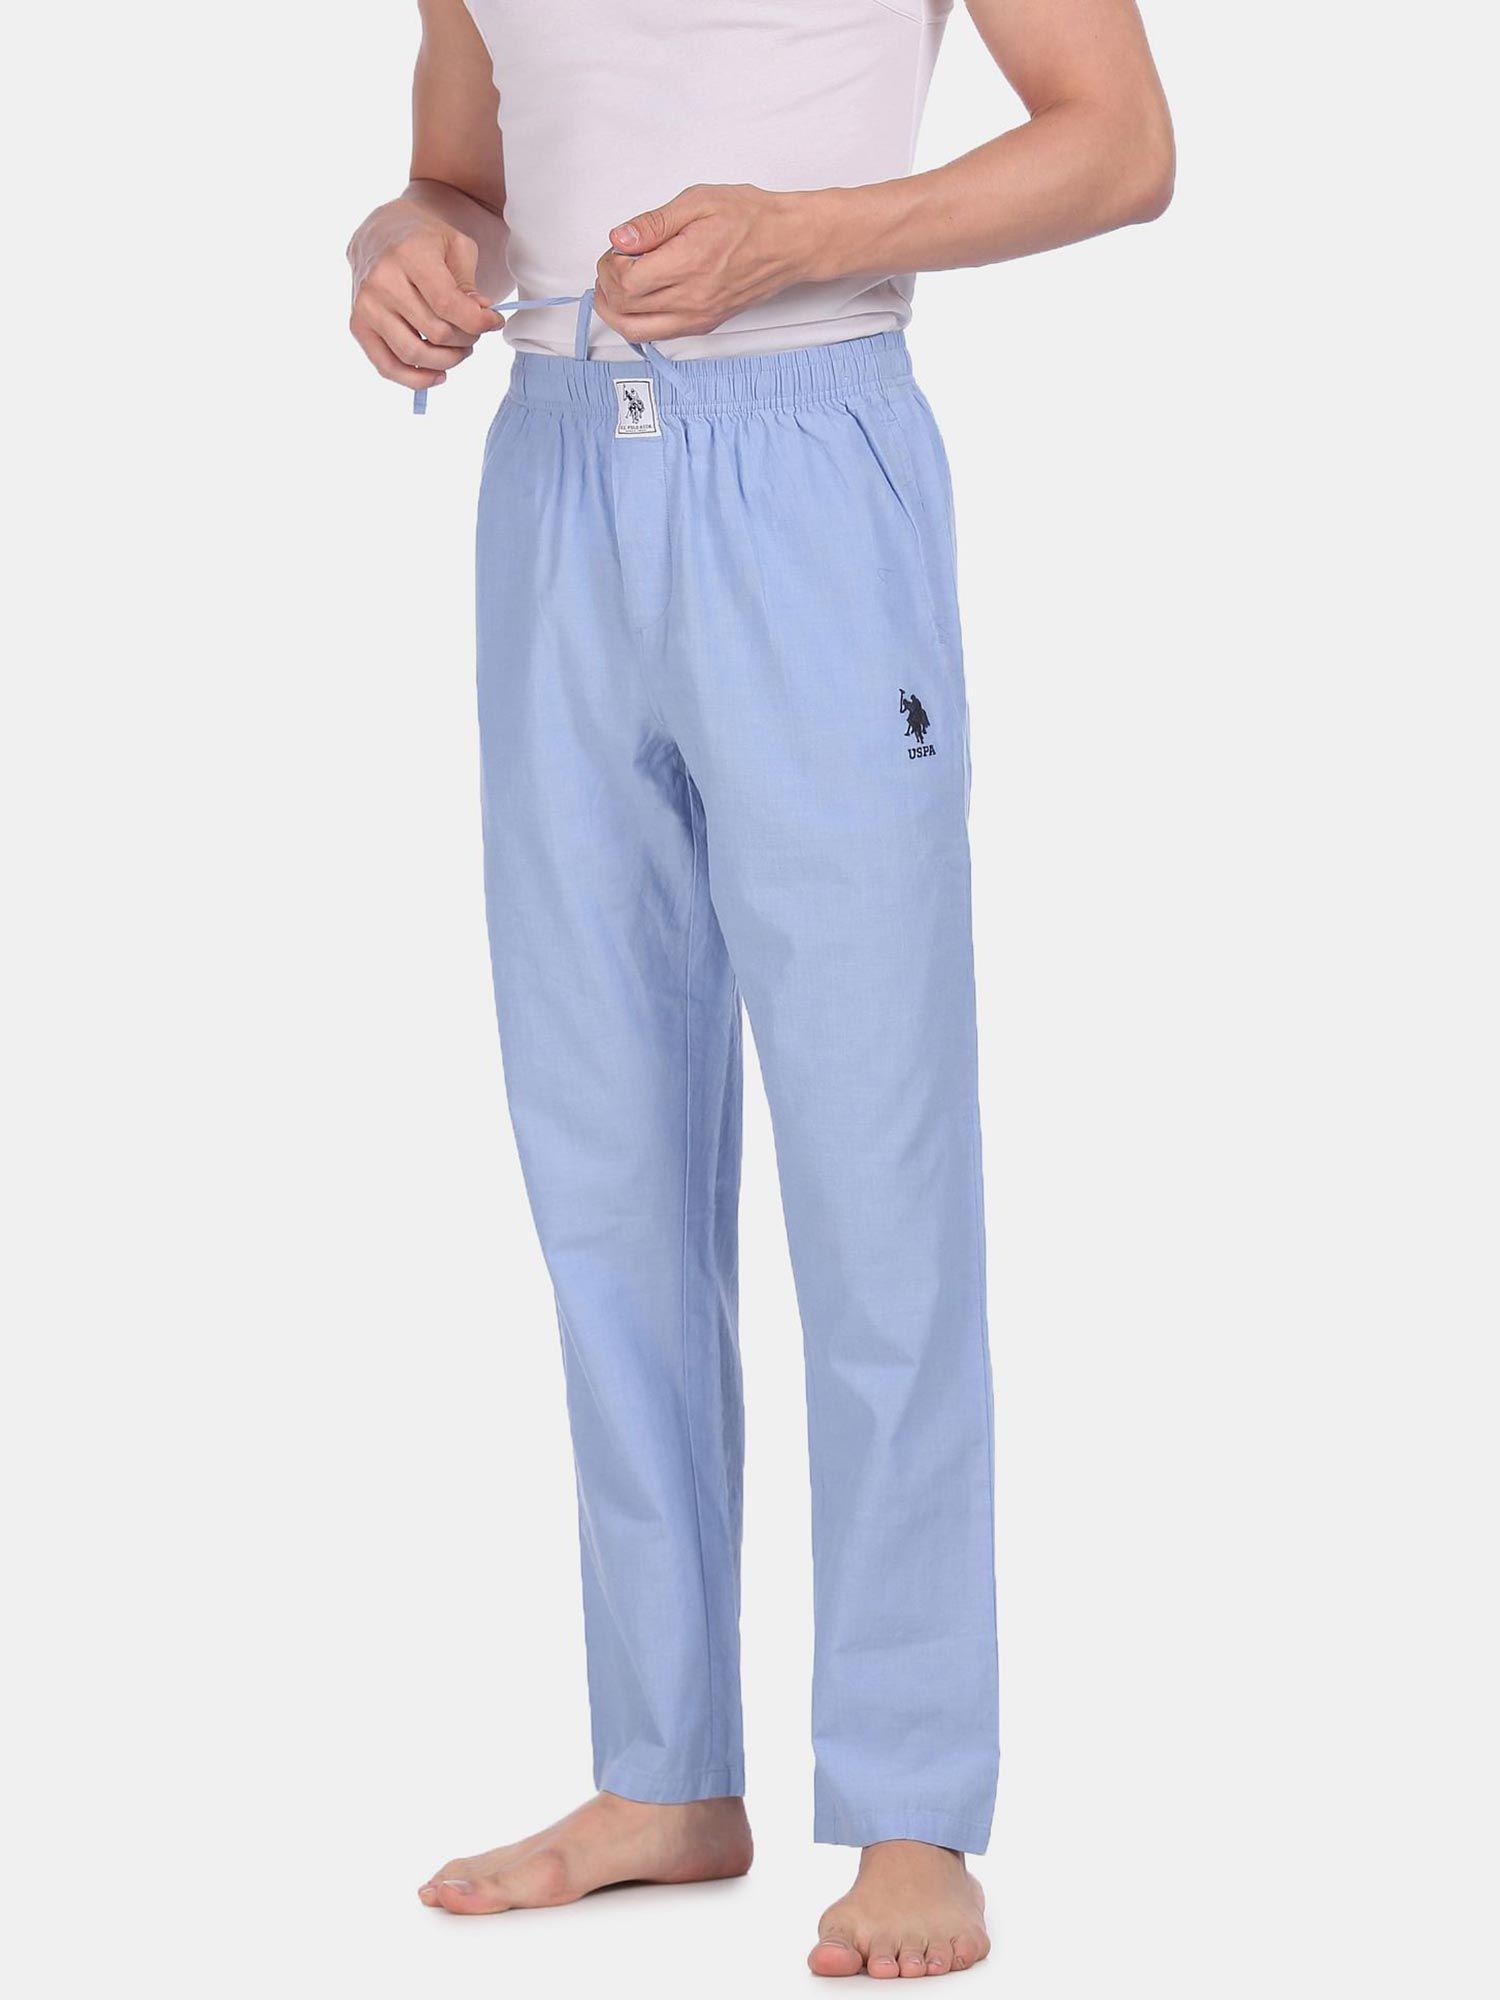 men-light-blue-i658-comfort-fit-solid-cotton-lounge-pants-blue